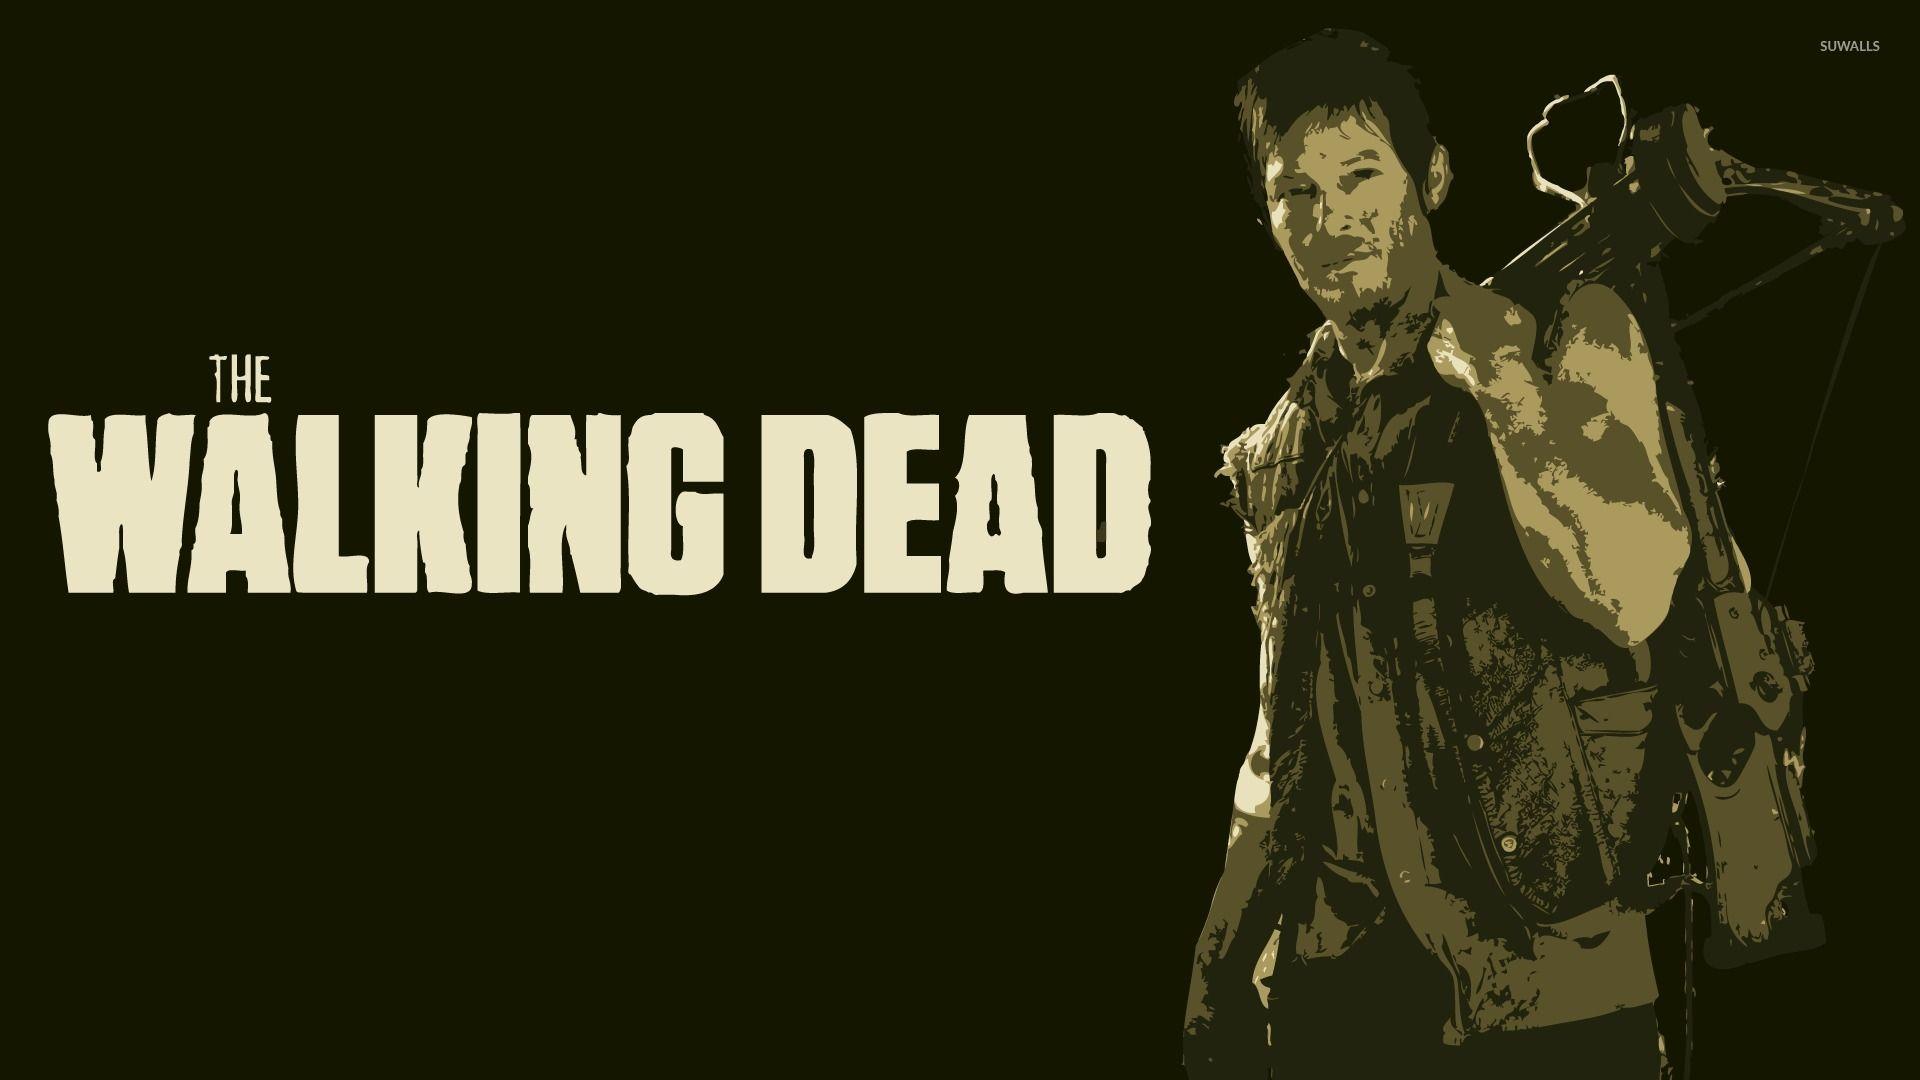 Rick Grimes from The Walking Dead wallpaper Show wallpaper